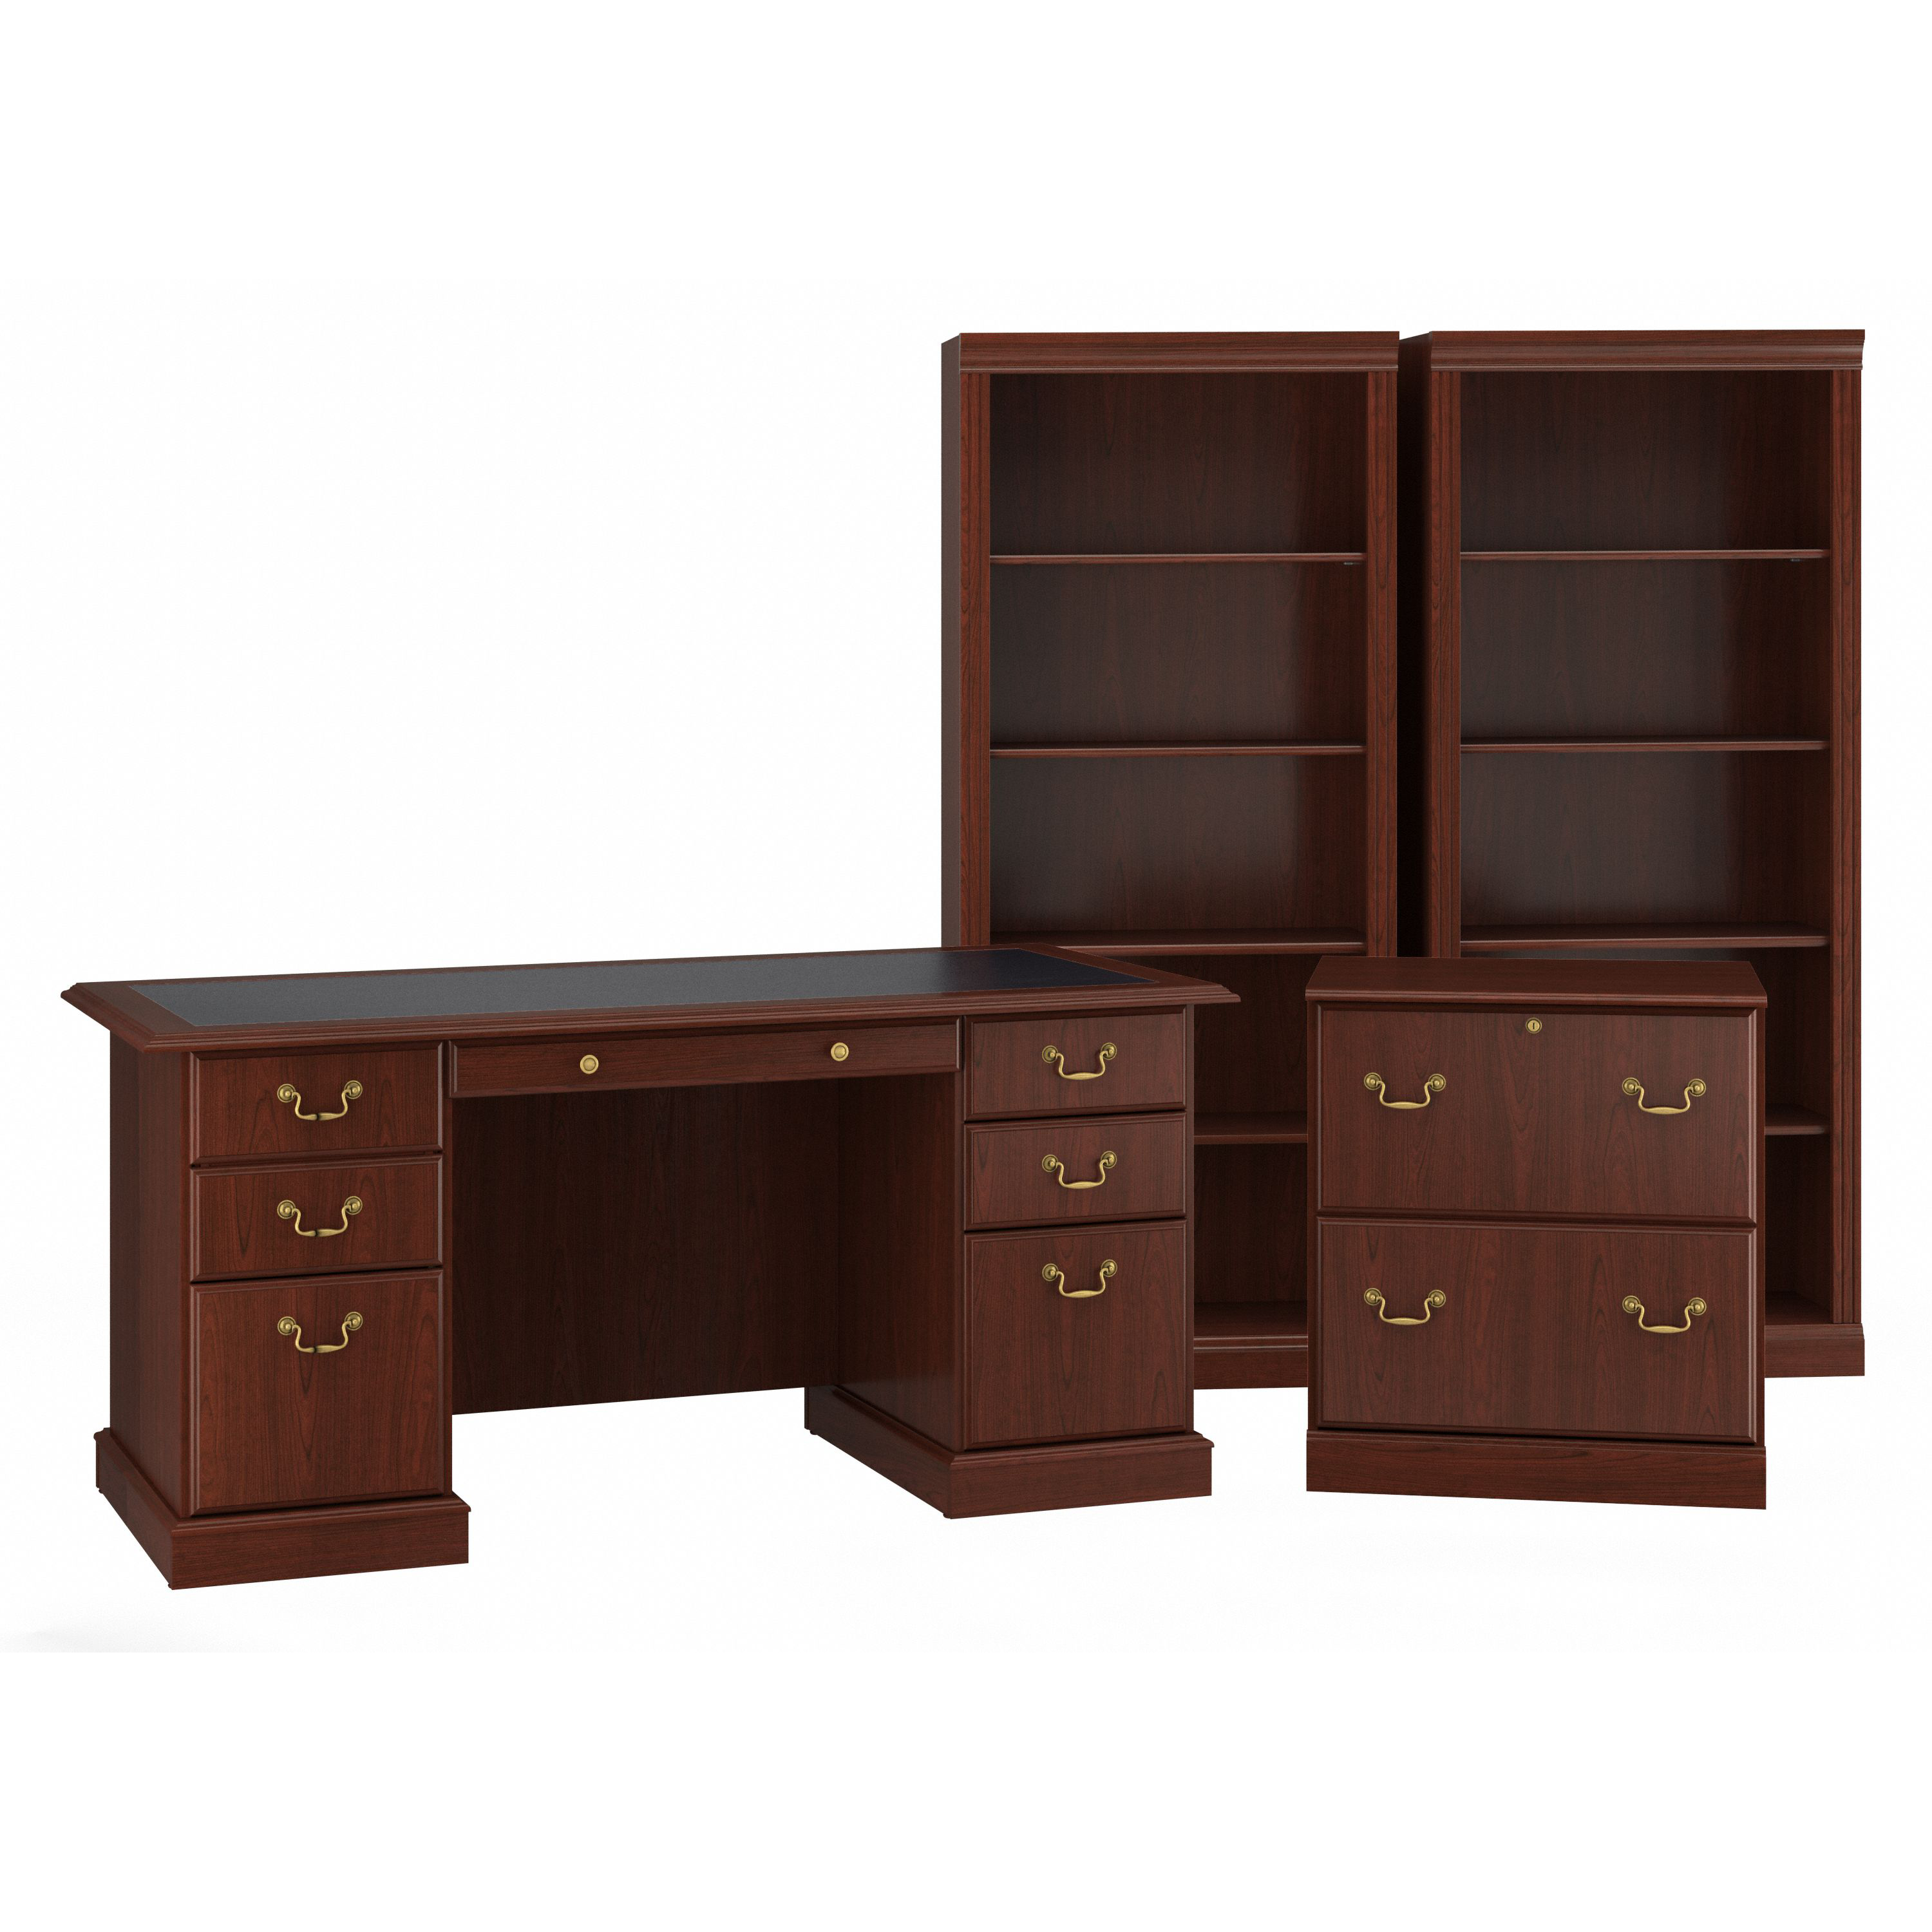 Shop Bush Furniture Saratoga Executive Desk with File Cabinet and Bookcase Set 02 SAR001CS #color_harvest cherry